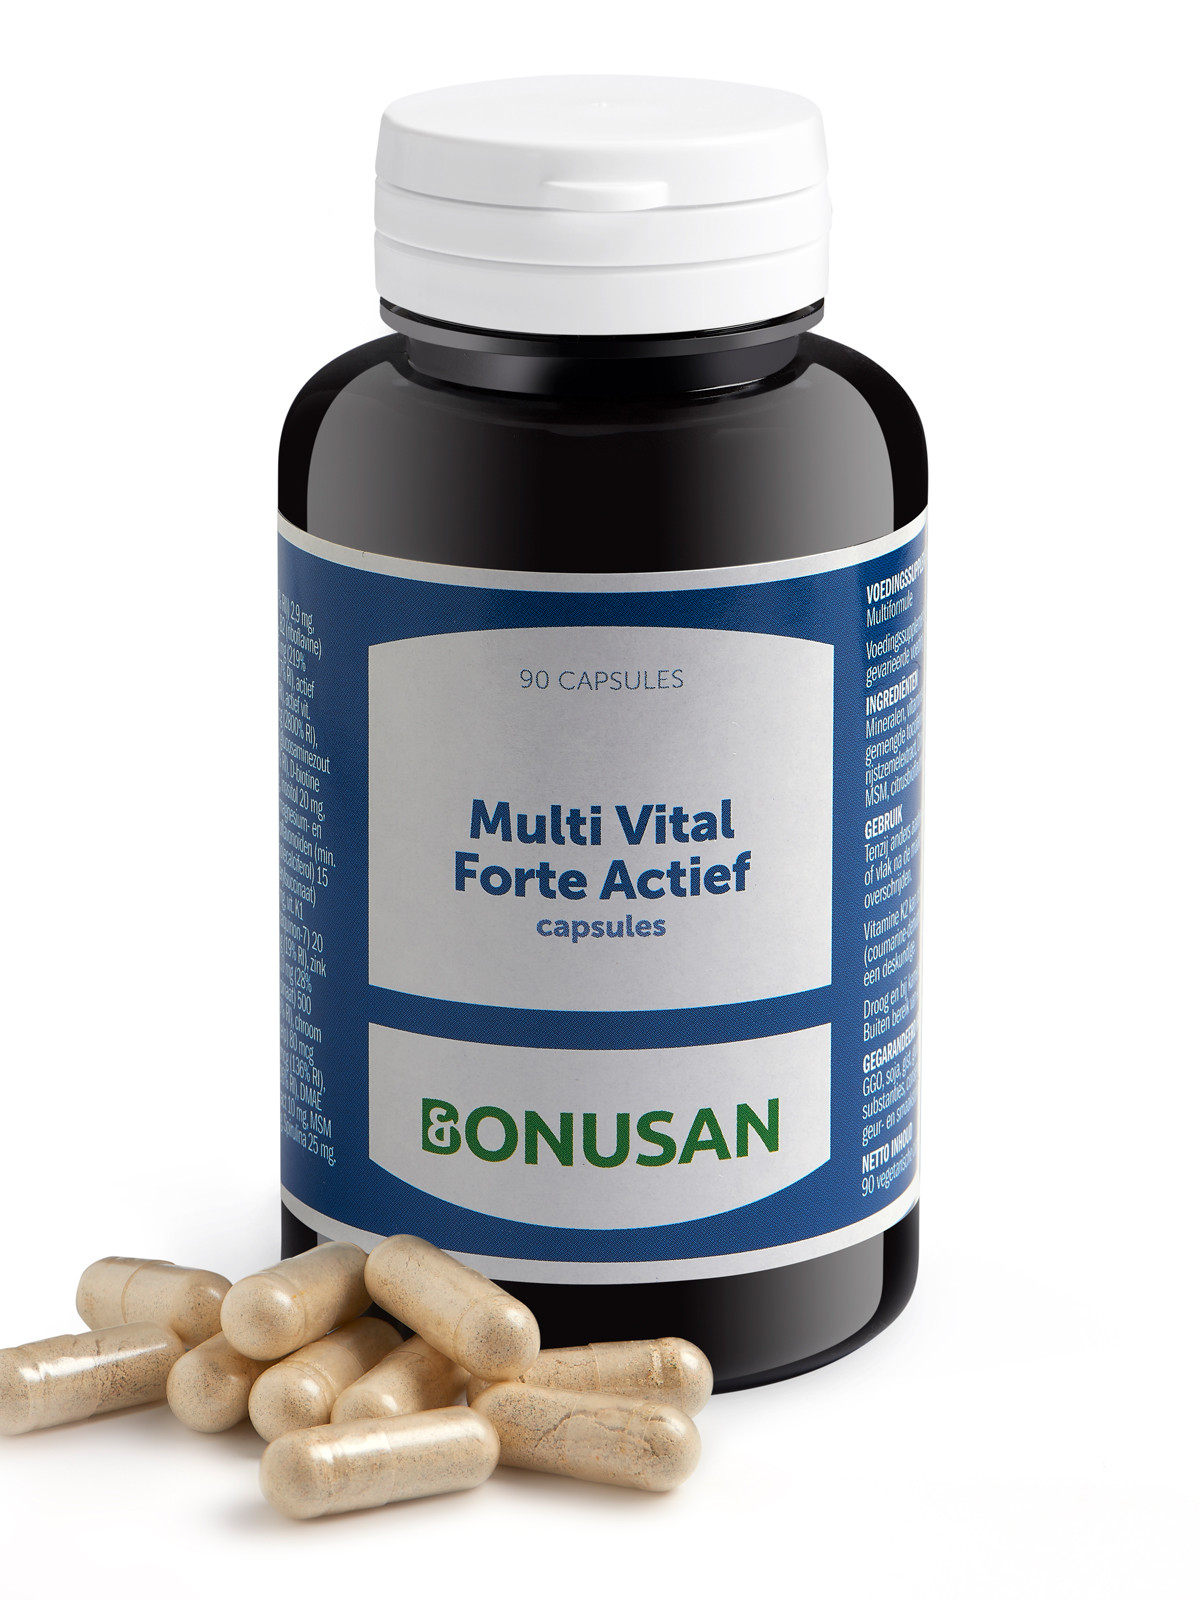 Bonusan - Multi Vital Forte Actief capsules - 90 stuks